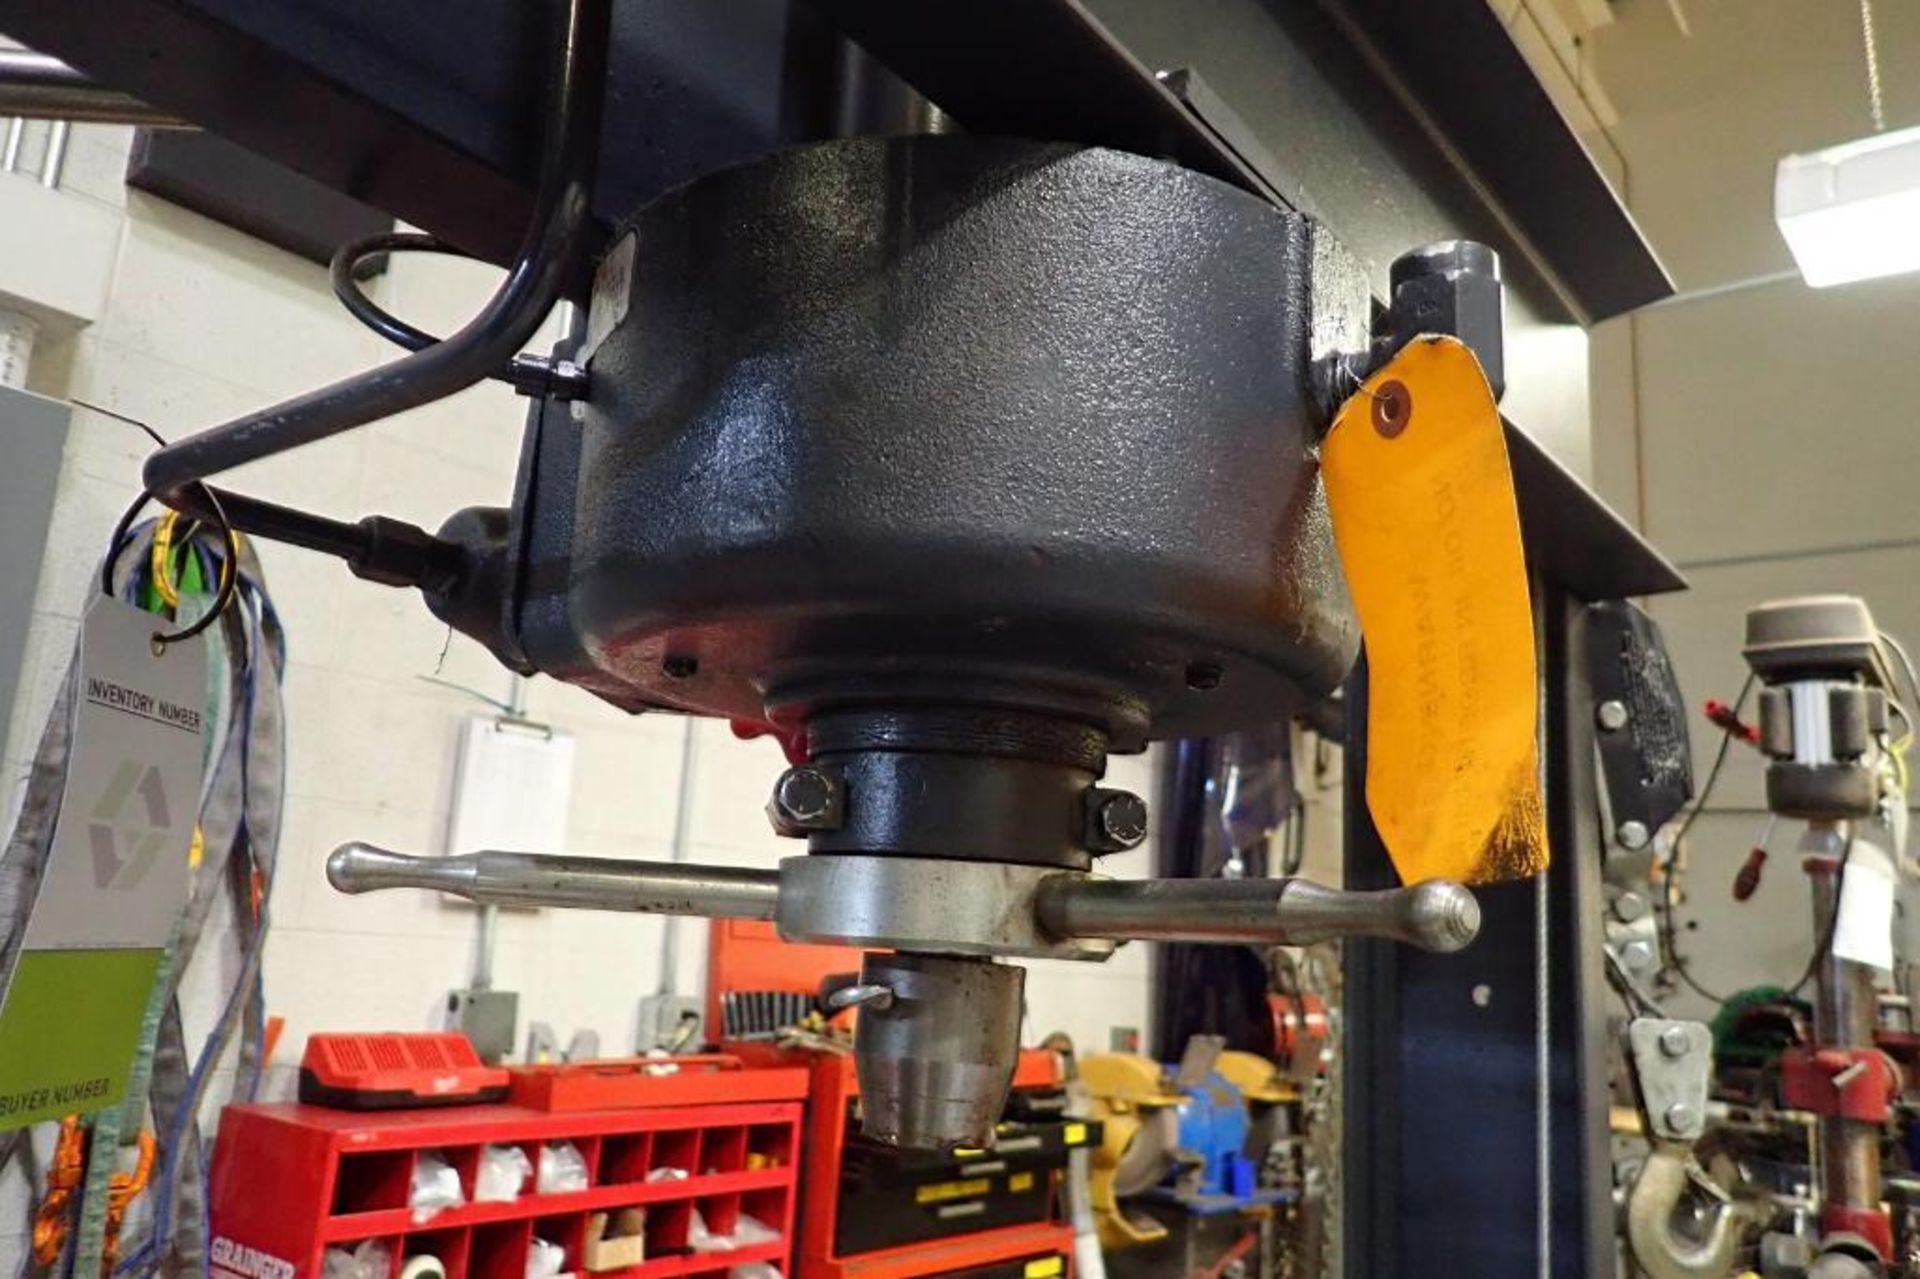 Dake hydraulic hand press, Model 907001, SN 1336394, made in the USA - ** Rigging Fee: $ 75 ** - Image 4 of 9